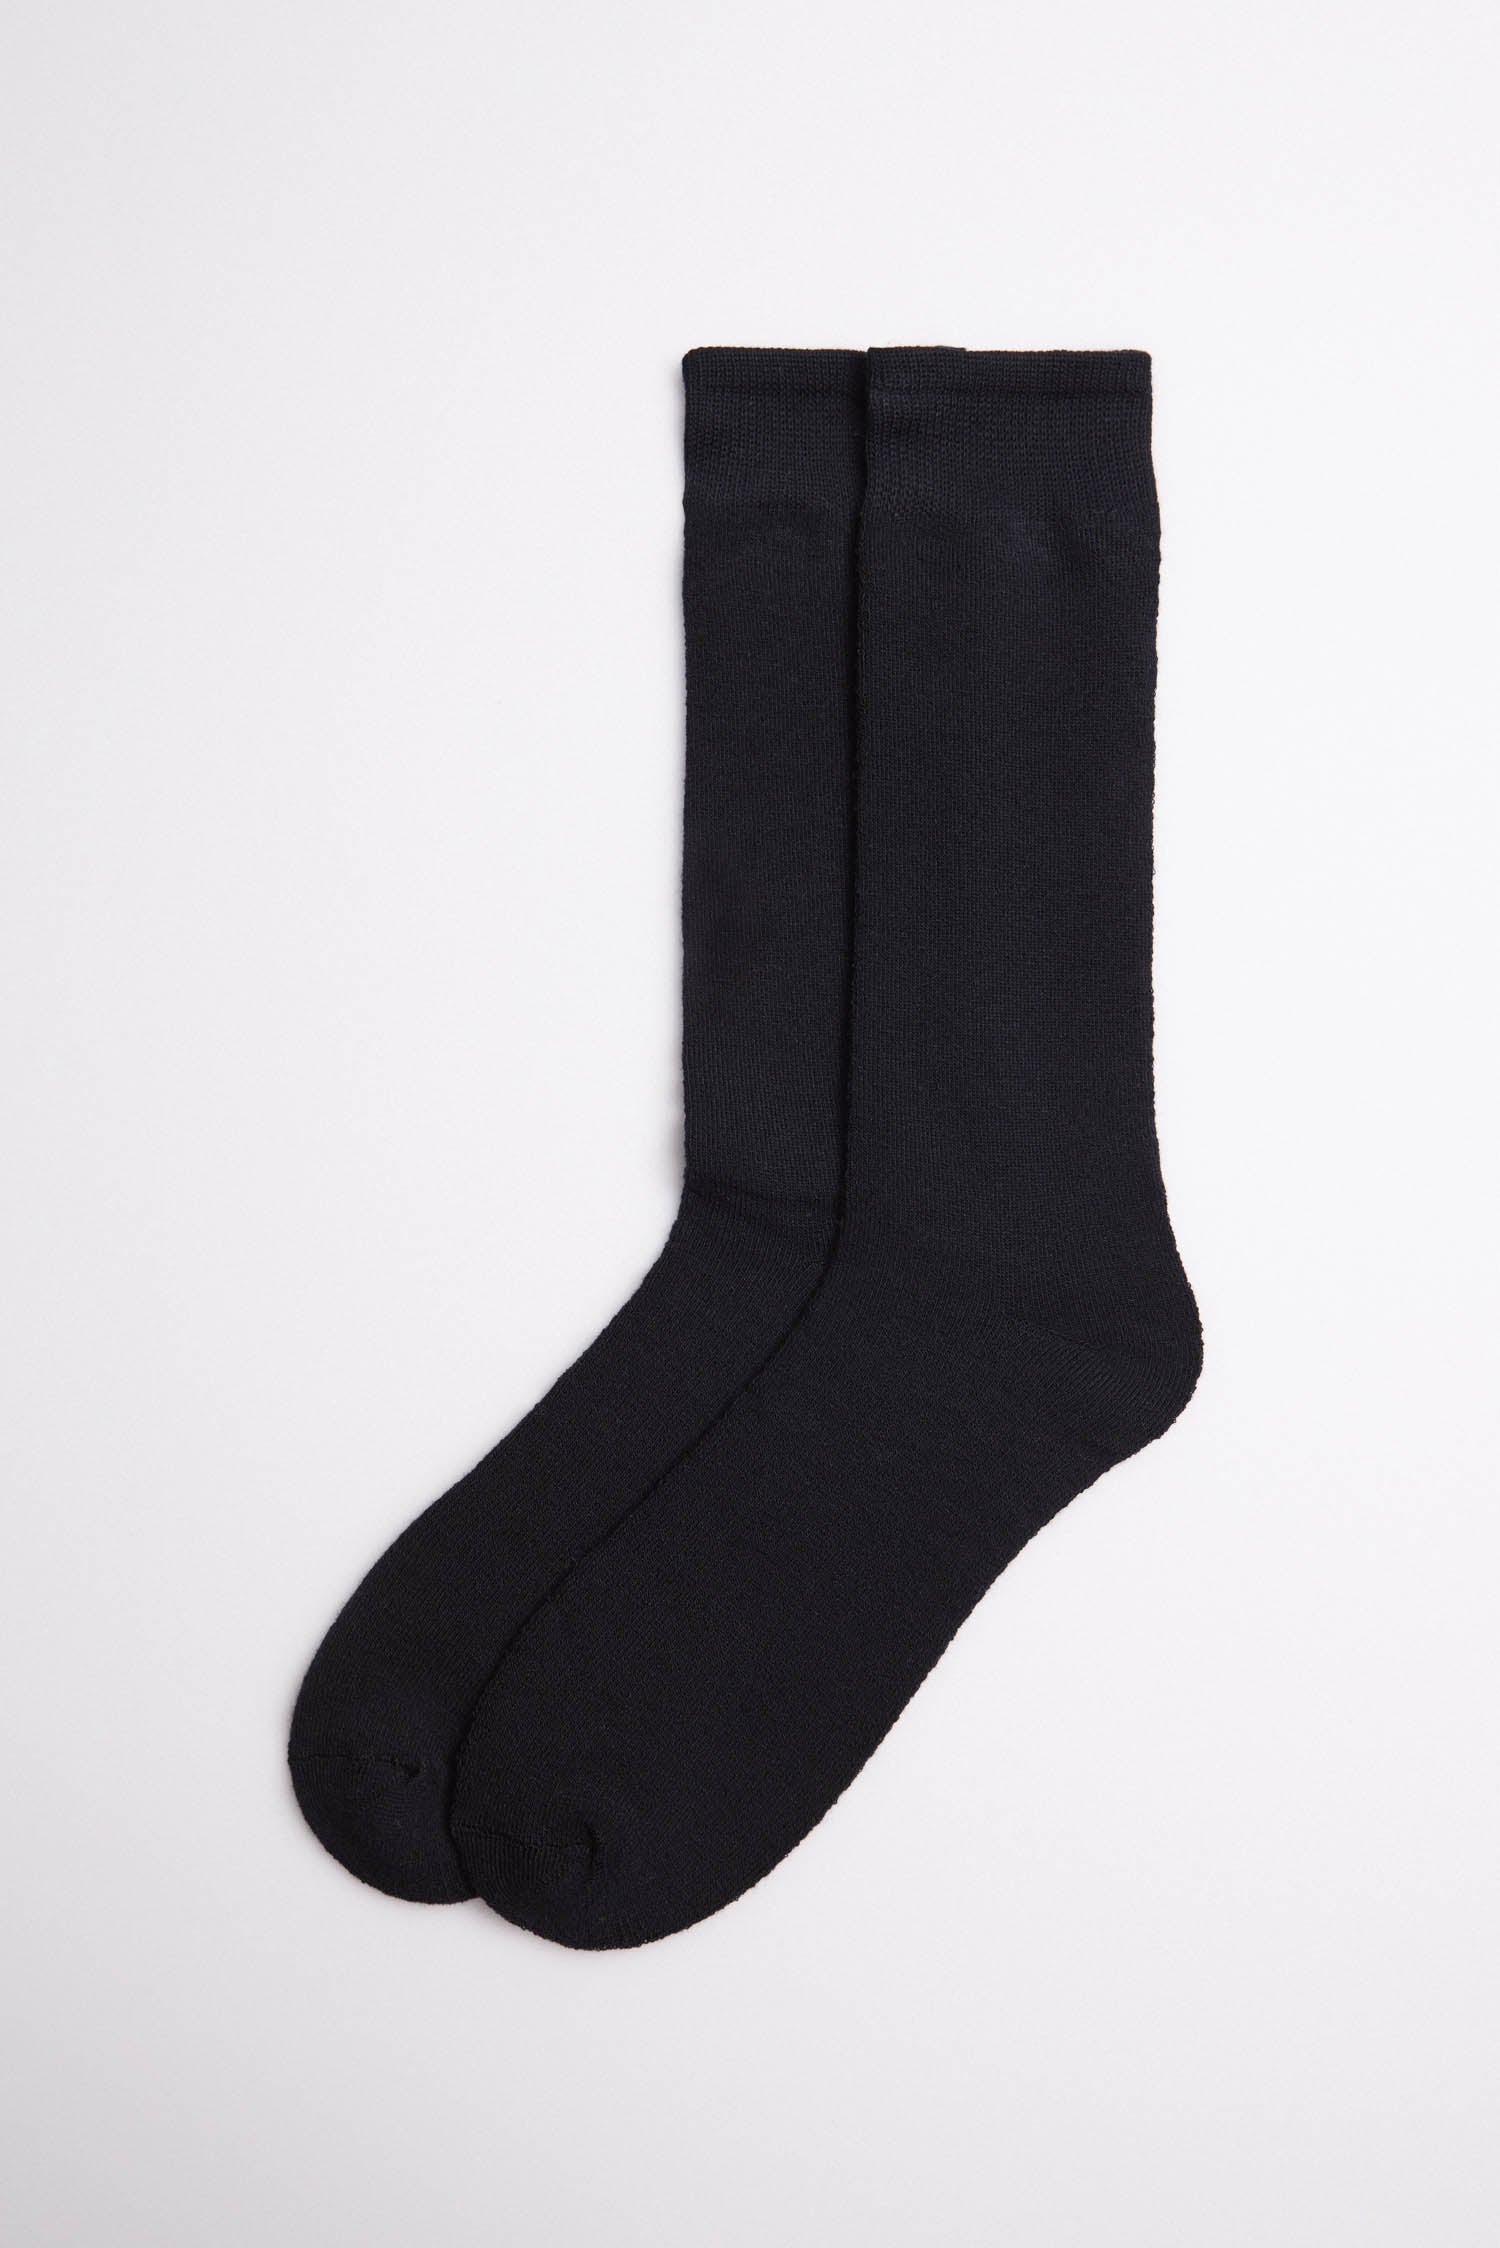 Ligas de calcetines negros para hombre, tirantes de calcetines